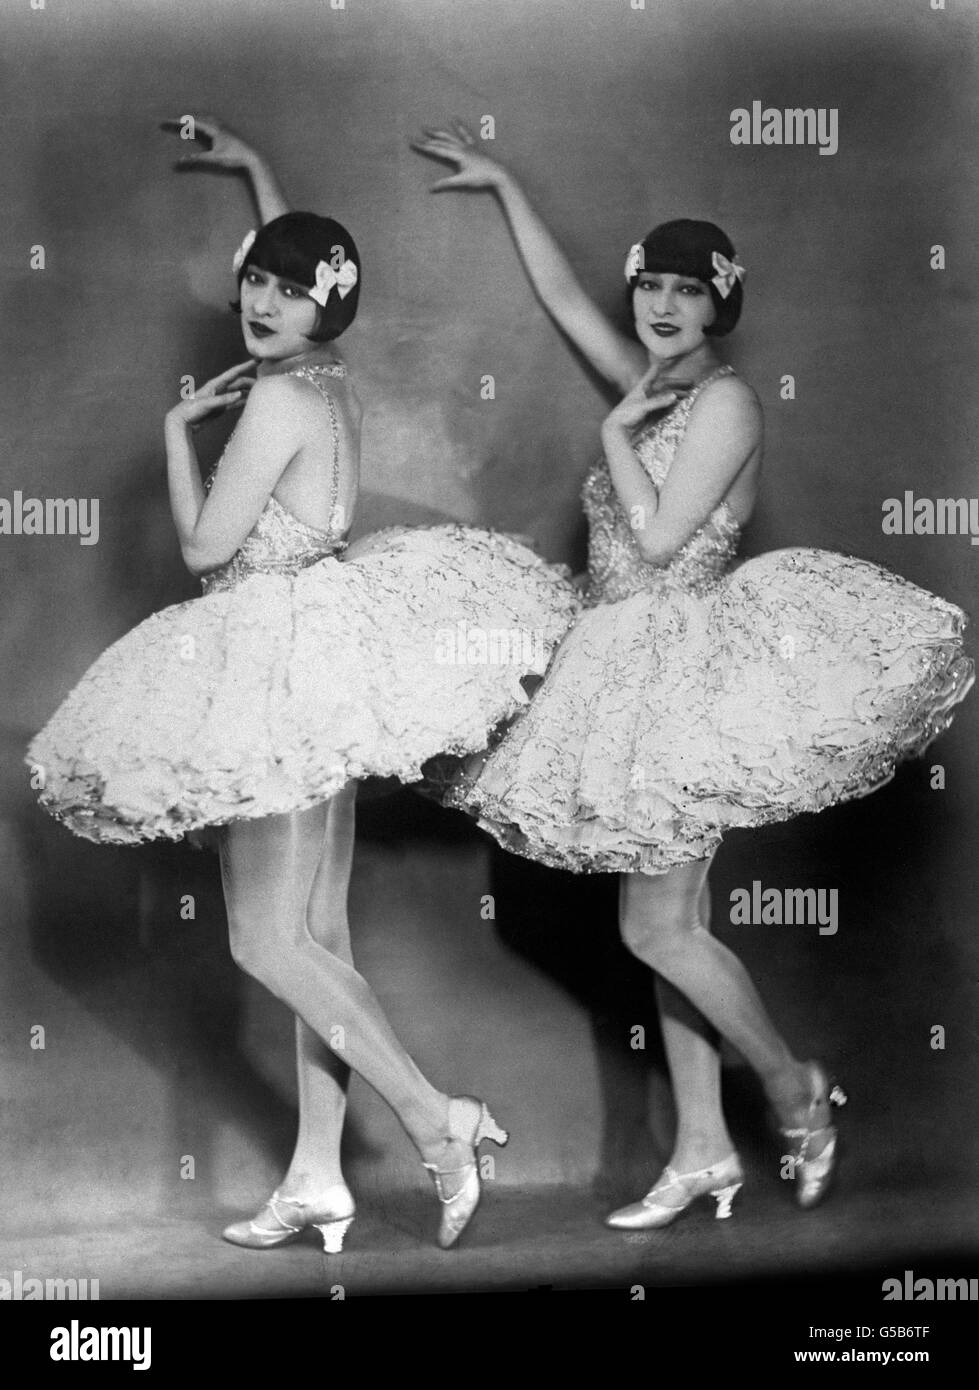 Dances dancing dance tutu Black and White Stock Photos & Images - Alamy